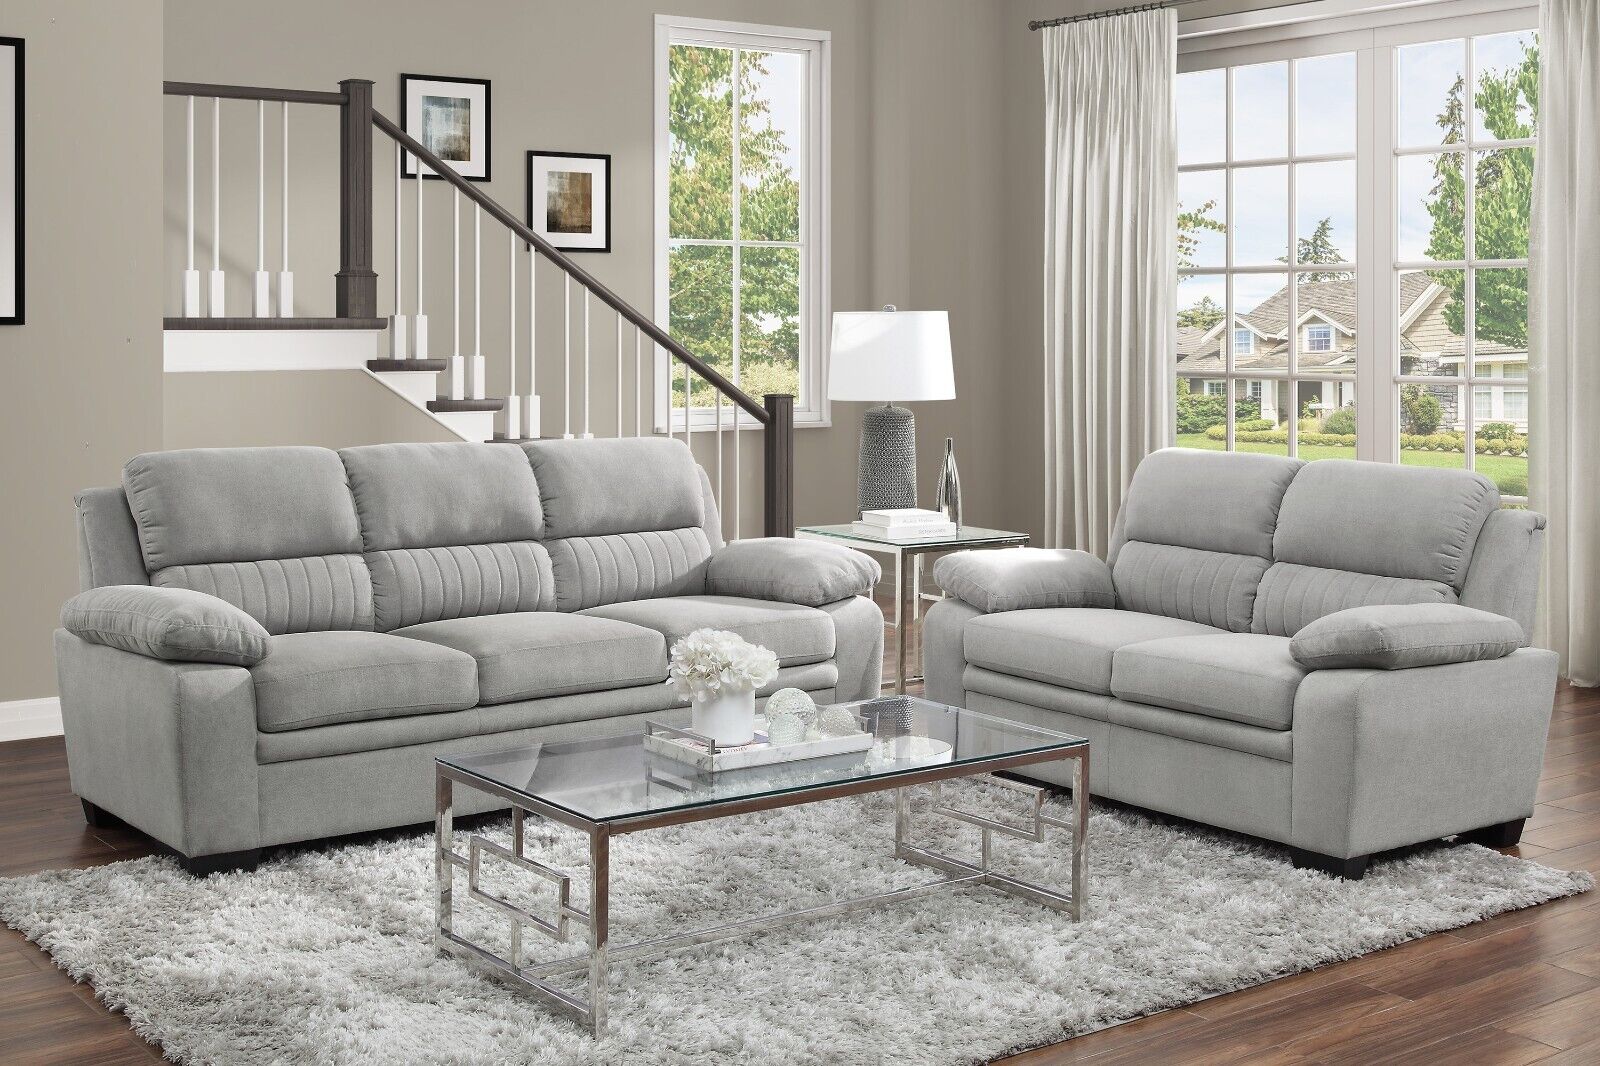 Esofastore Contemporary Living Room 2pc Plush Seating Sofa Loveseat Set Gray Fabric Modern Living Room